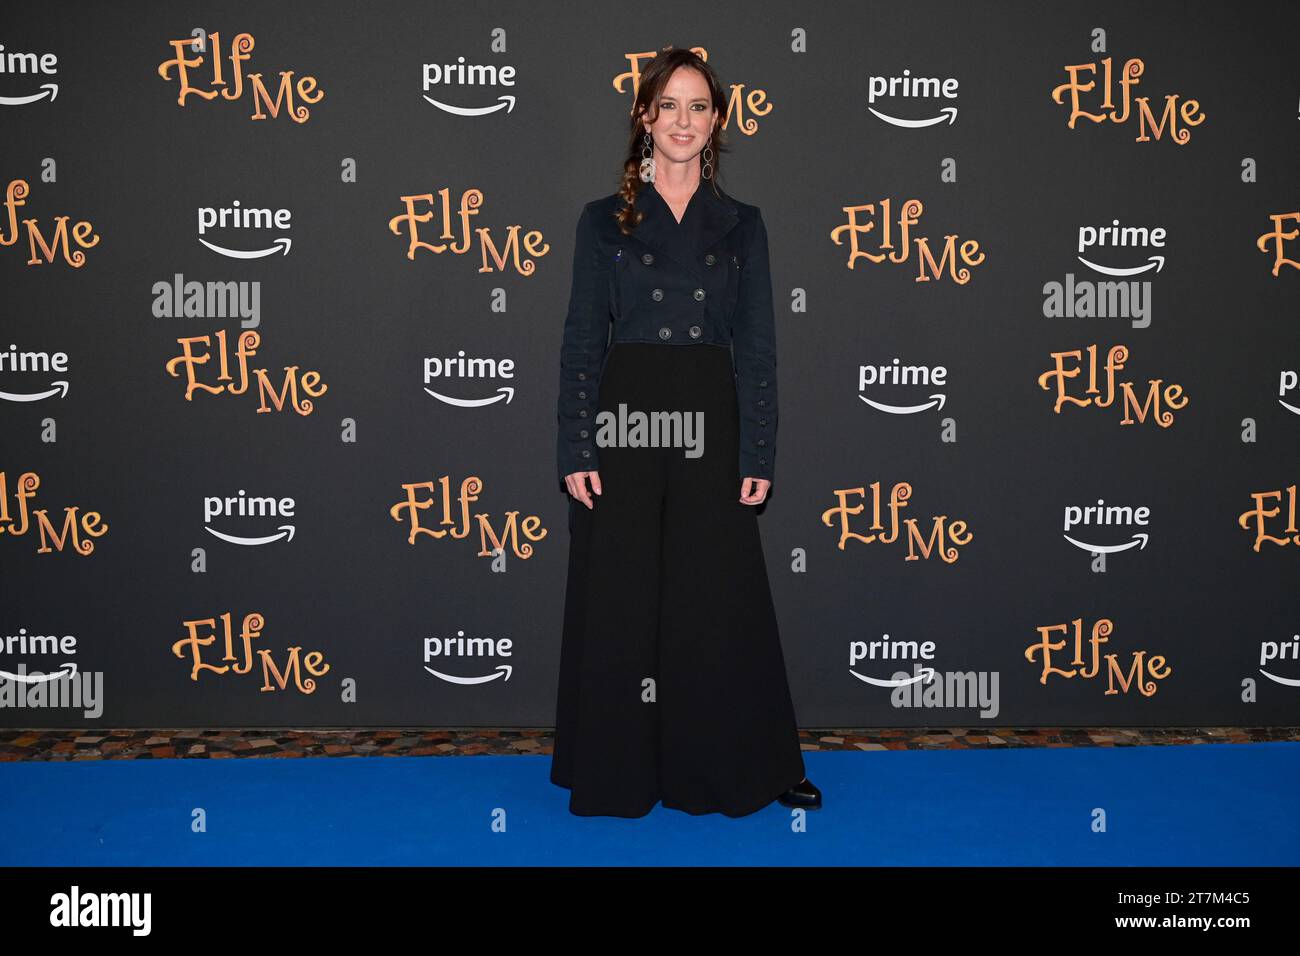 Caterina Guzzanti attends the blu carpet of the premiere of the movie 'Elf Me' at The Space Cinema Moderno. Stock Photo